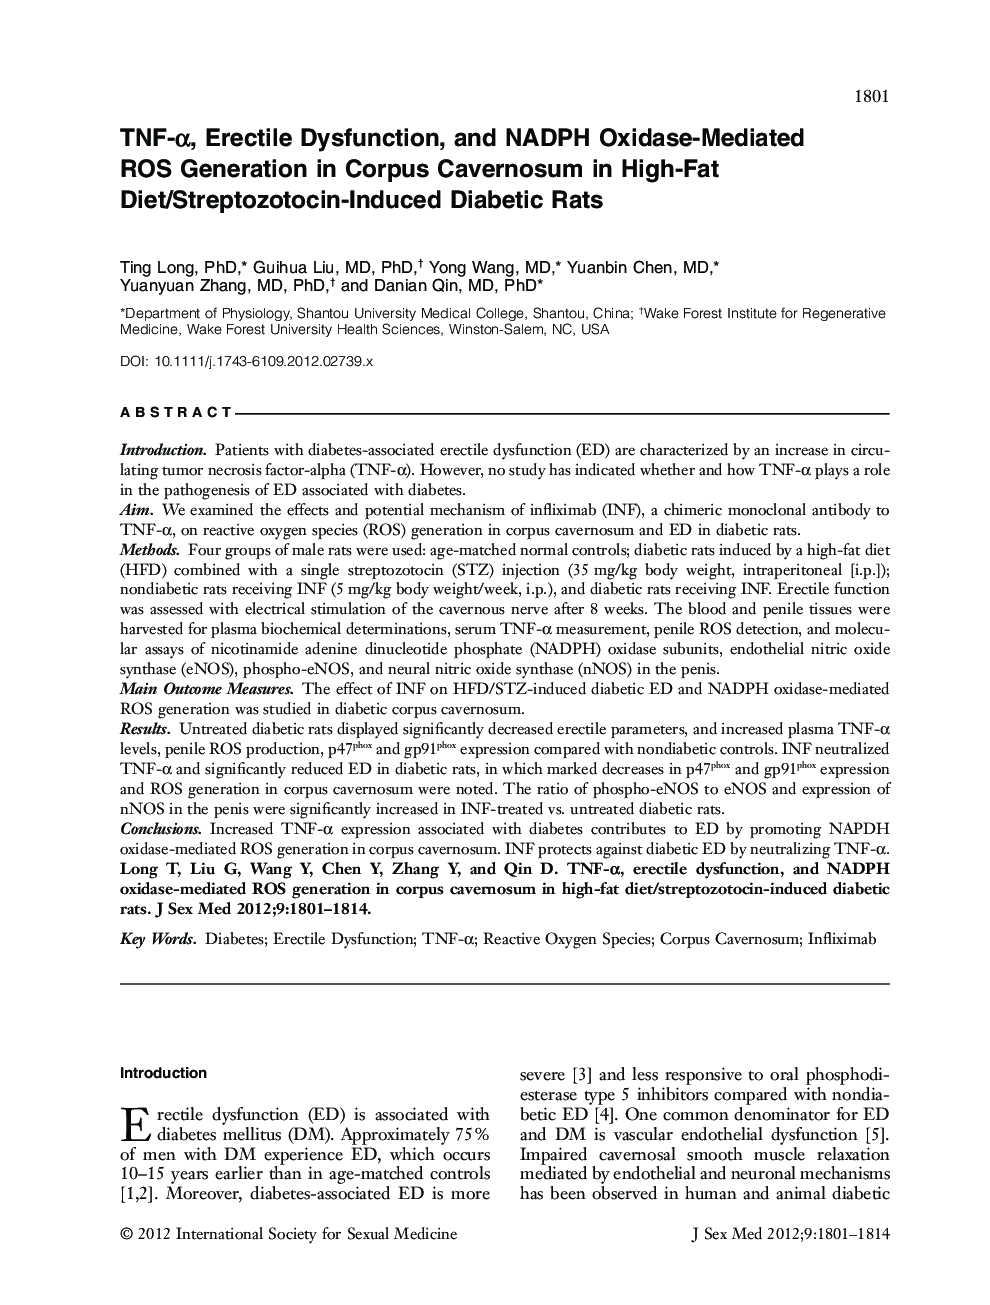 TNFâÎ±, Erectile Dysfunction, and NADPH OxidaseâMediated ROS Generation in Corpus Cavernosum in HighâFat Diet/StreptozotocinâInduced Diabetic Rats